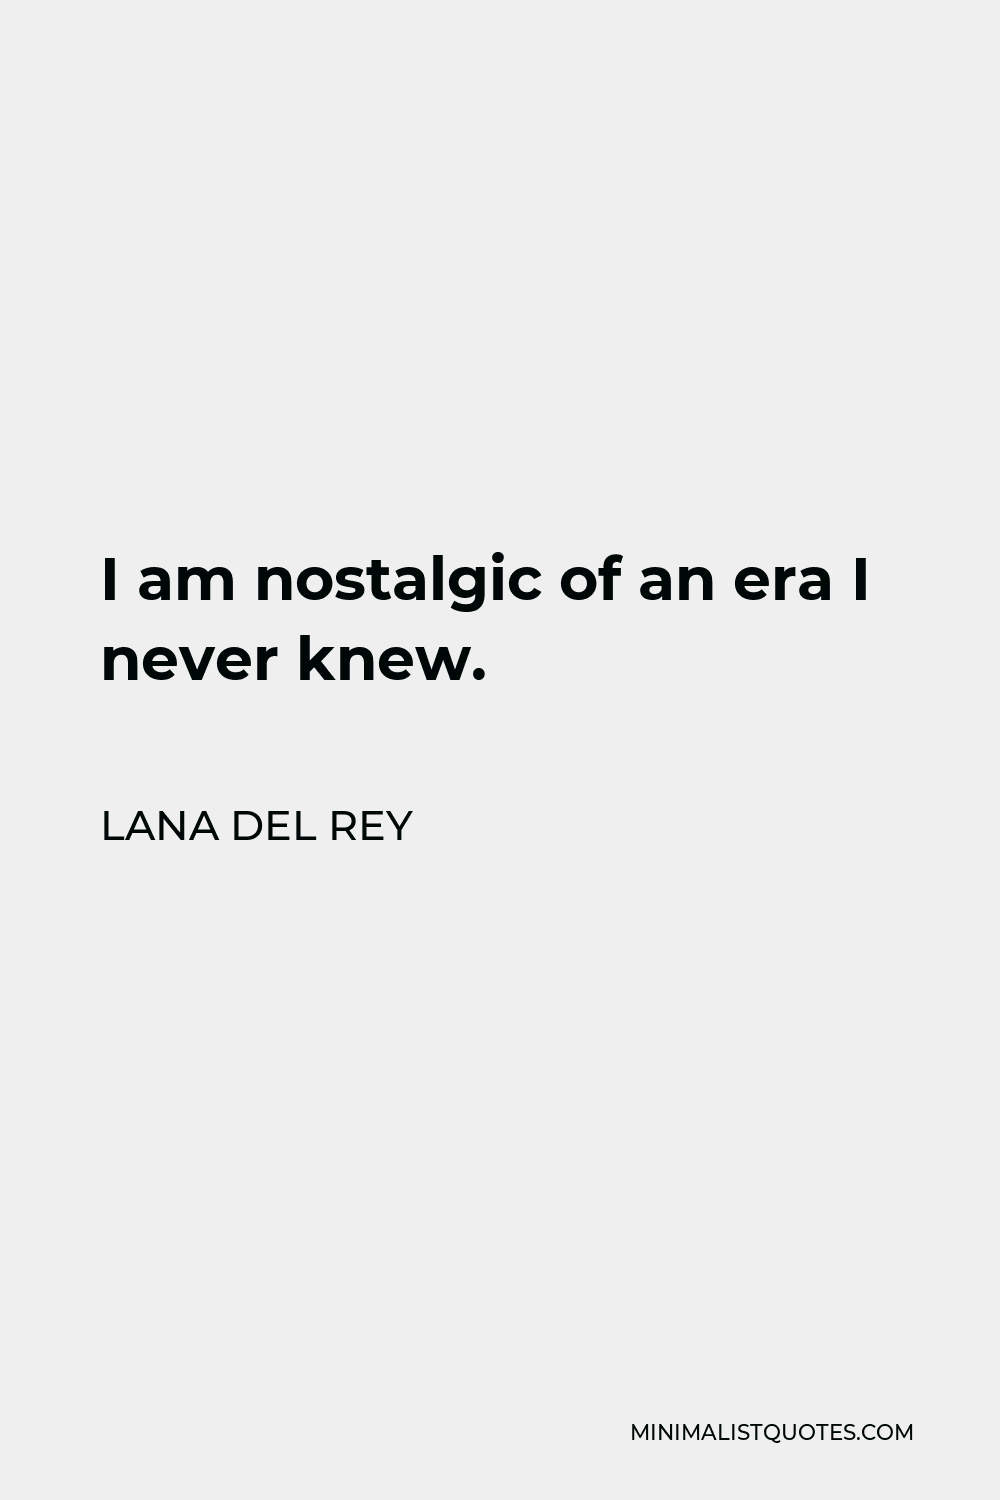 Lana Del Rey Quote - I am nostalgic of an era I never knew.